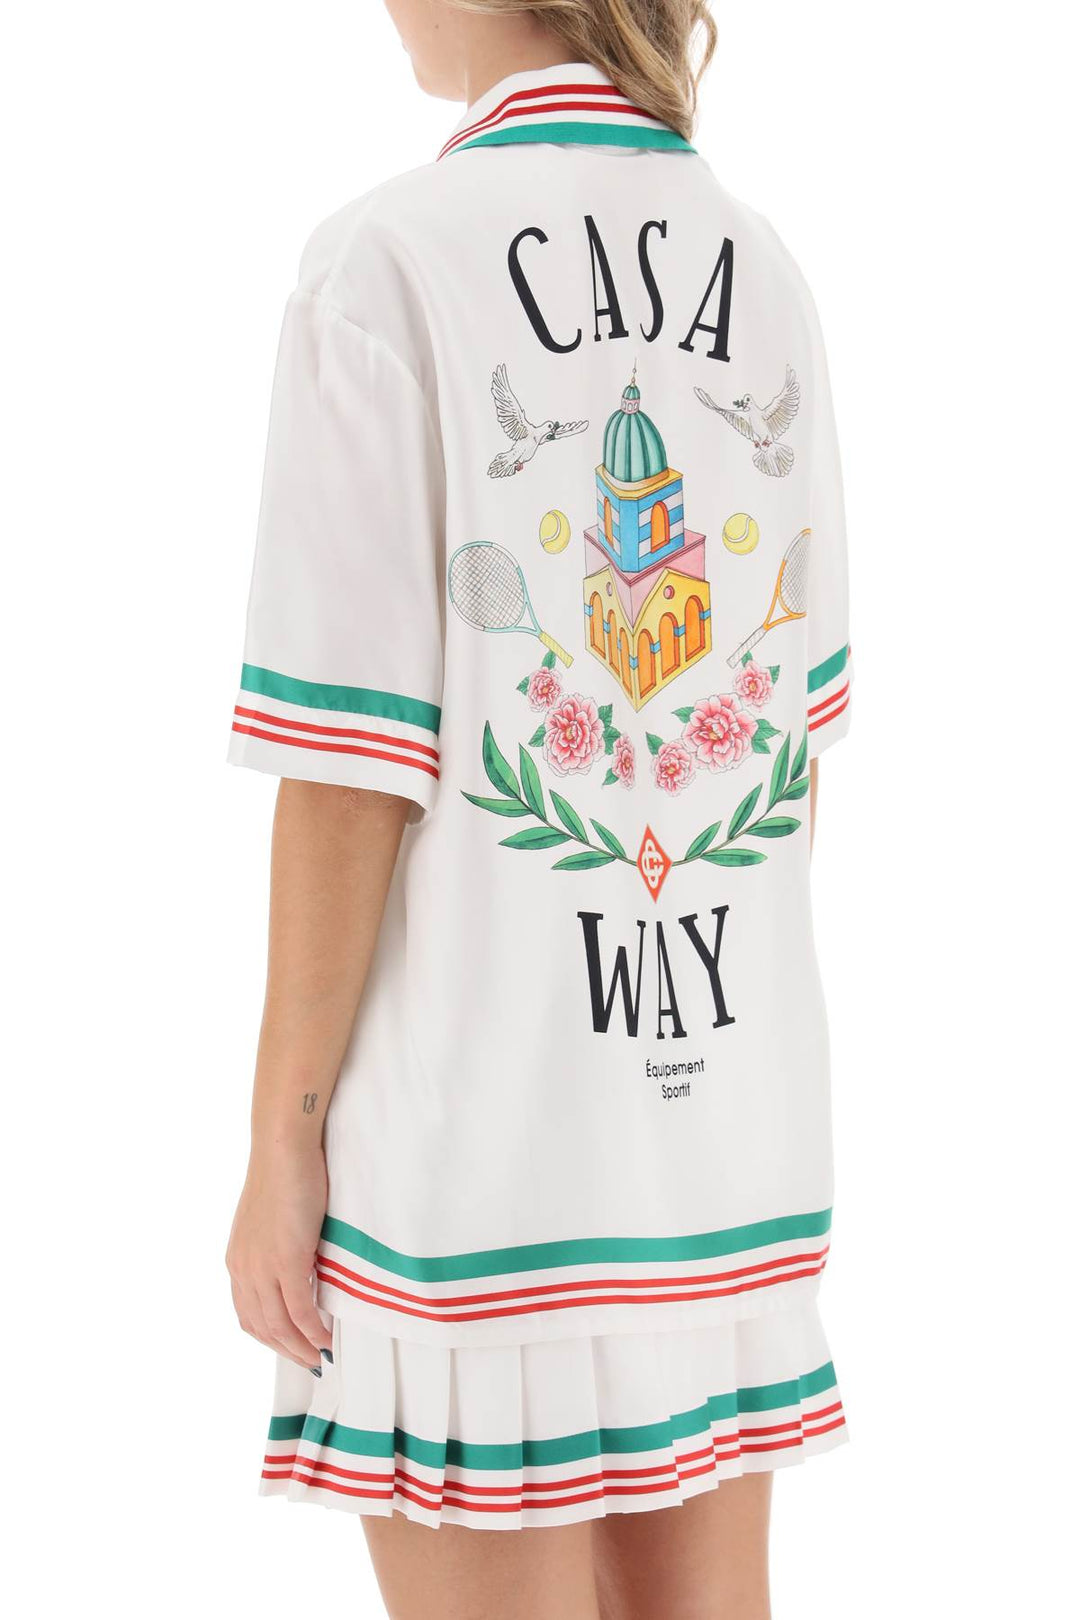 Camicia Bowling In Seta Casa Way - Casablanca - Donna